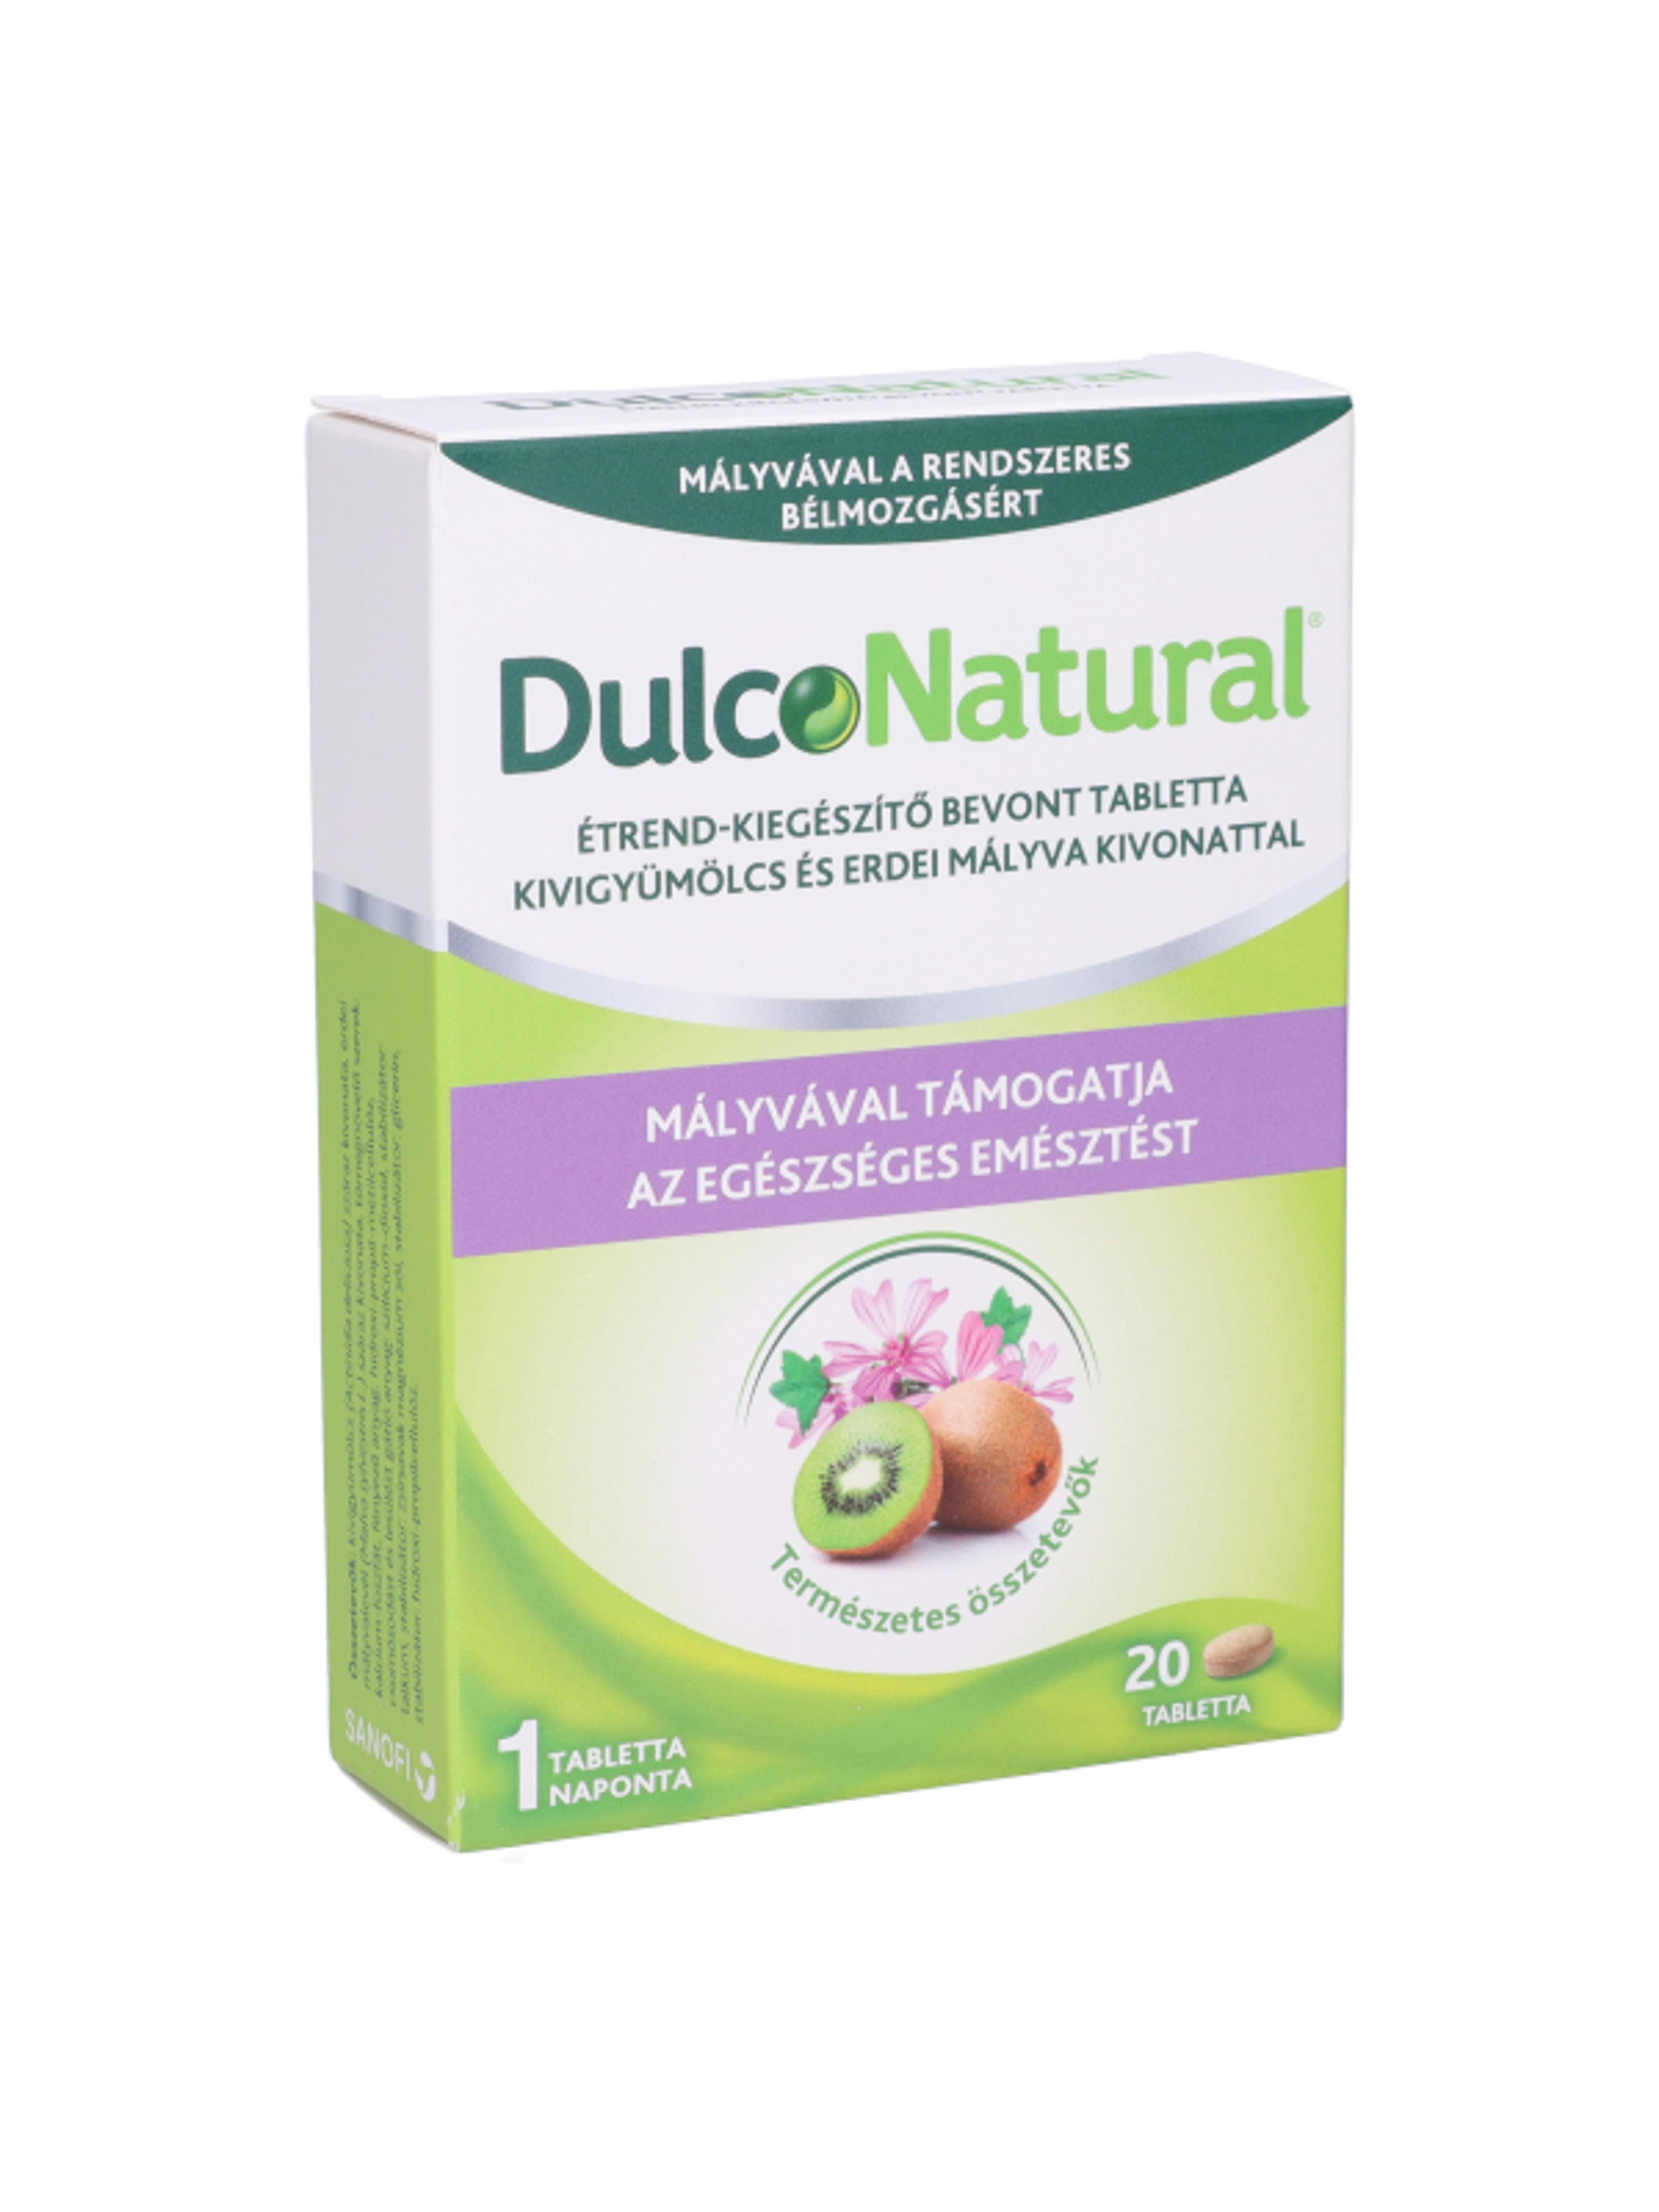 Dulconatural étrend-kiegészítő tabletta - 20 db